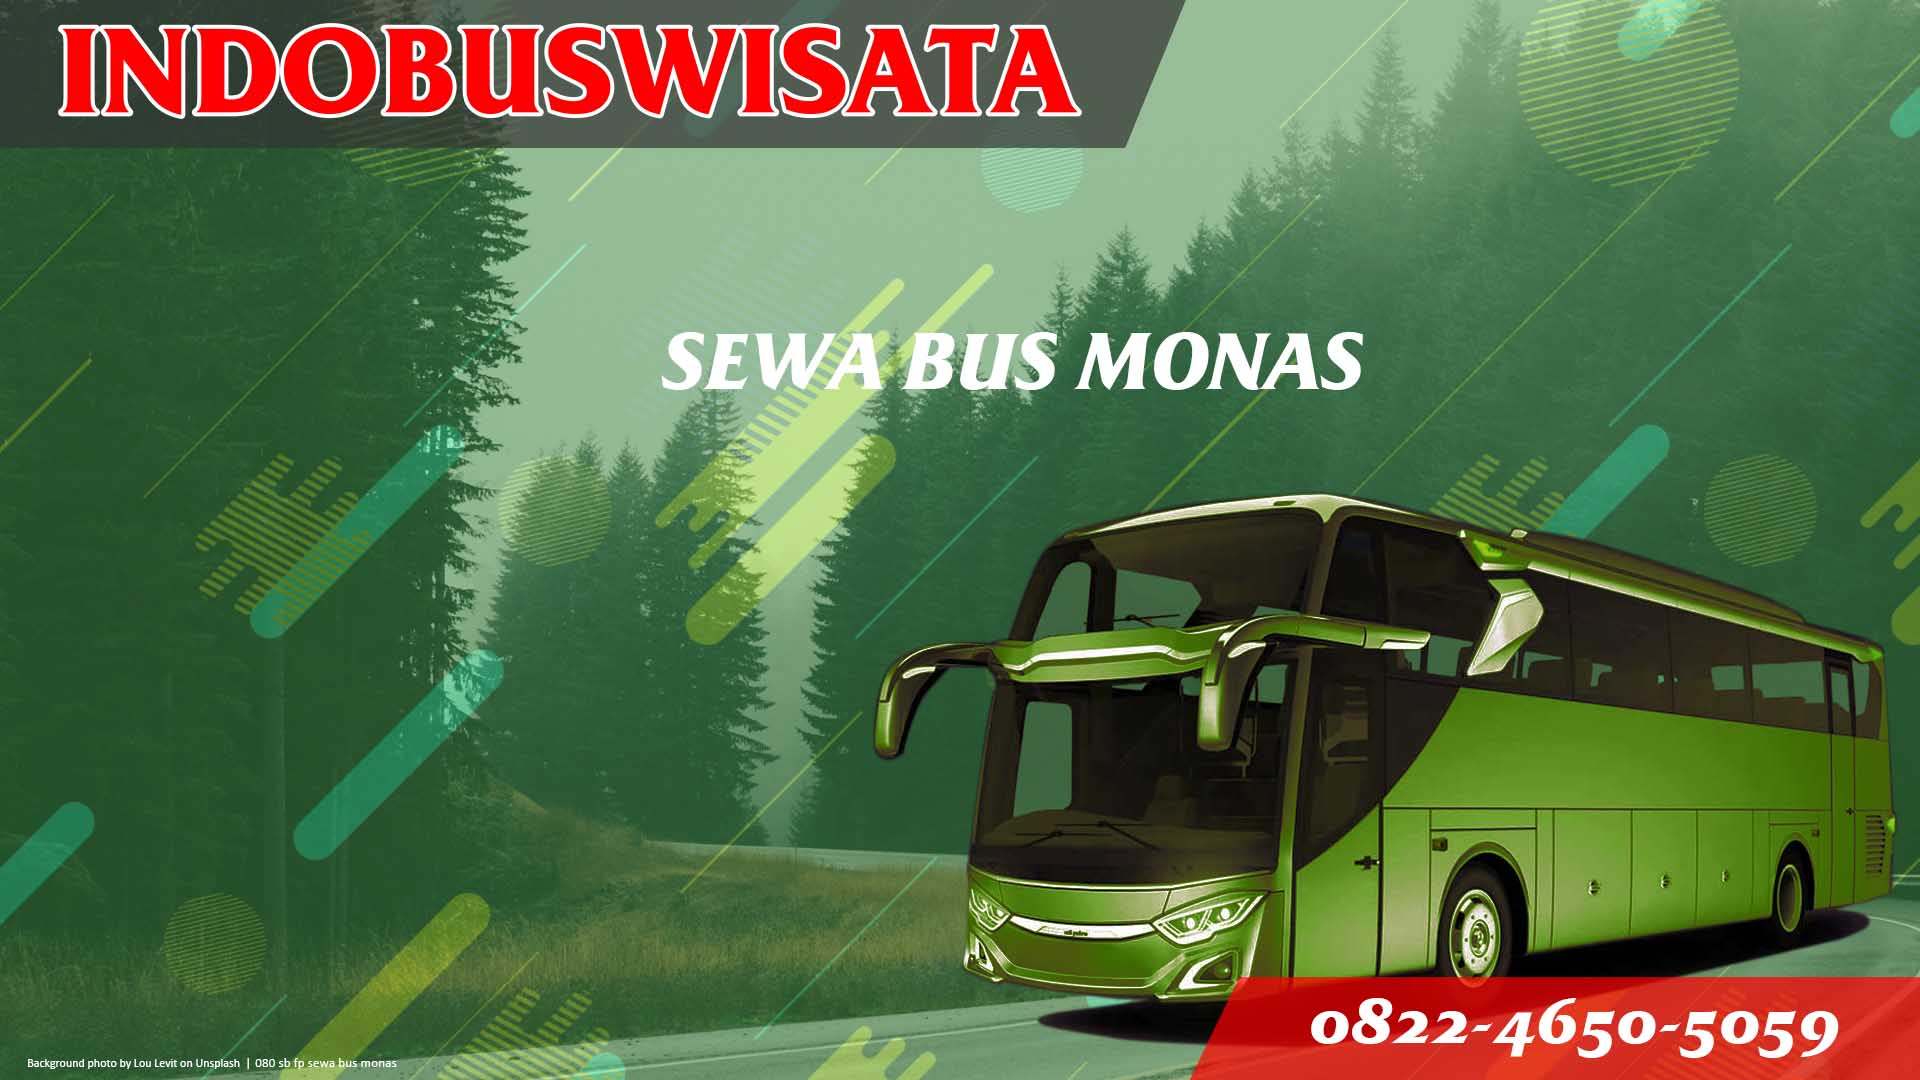 080 Sb Fp Sewa Bus Monas Jb 3 Hdd Indobuswisata